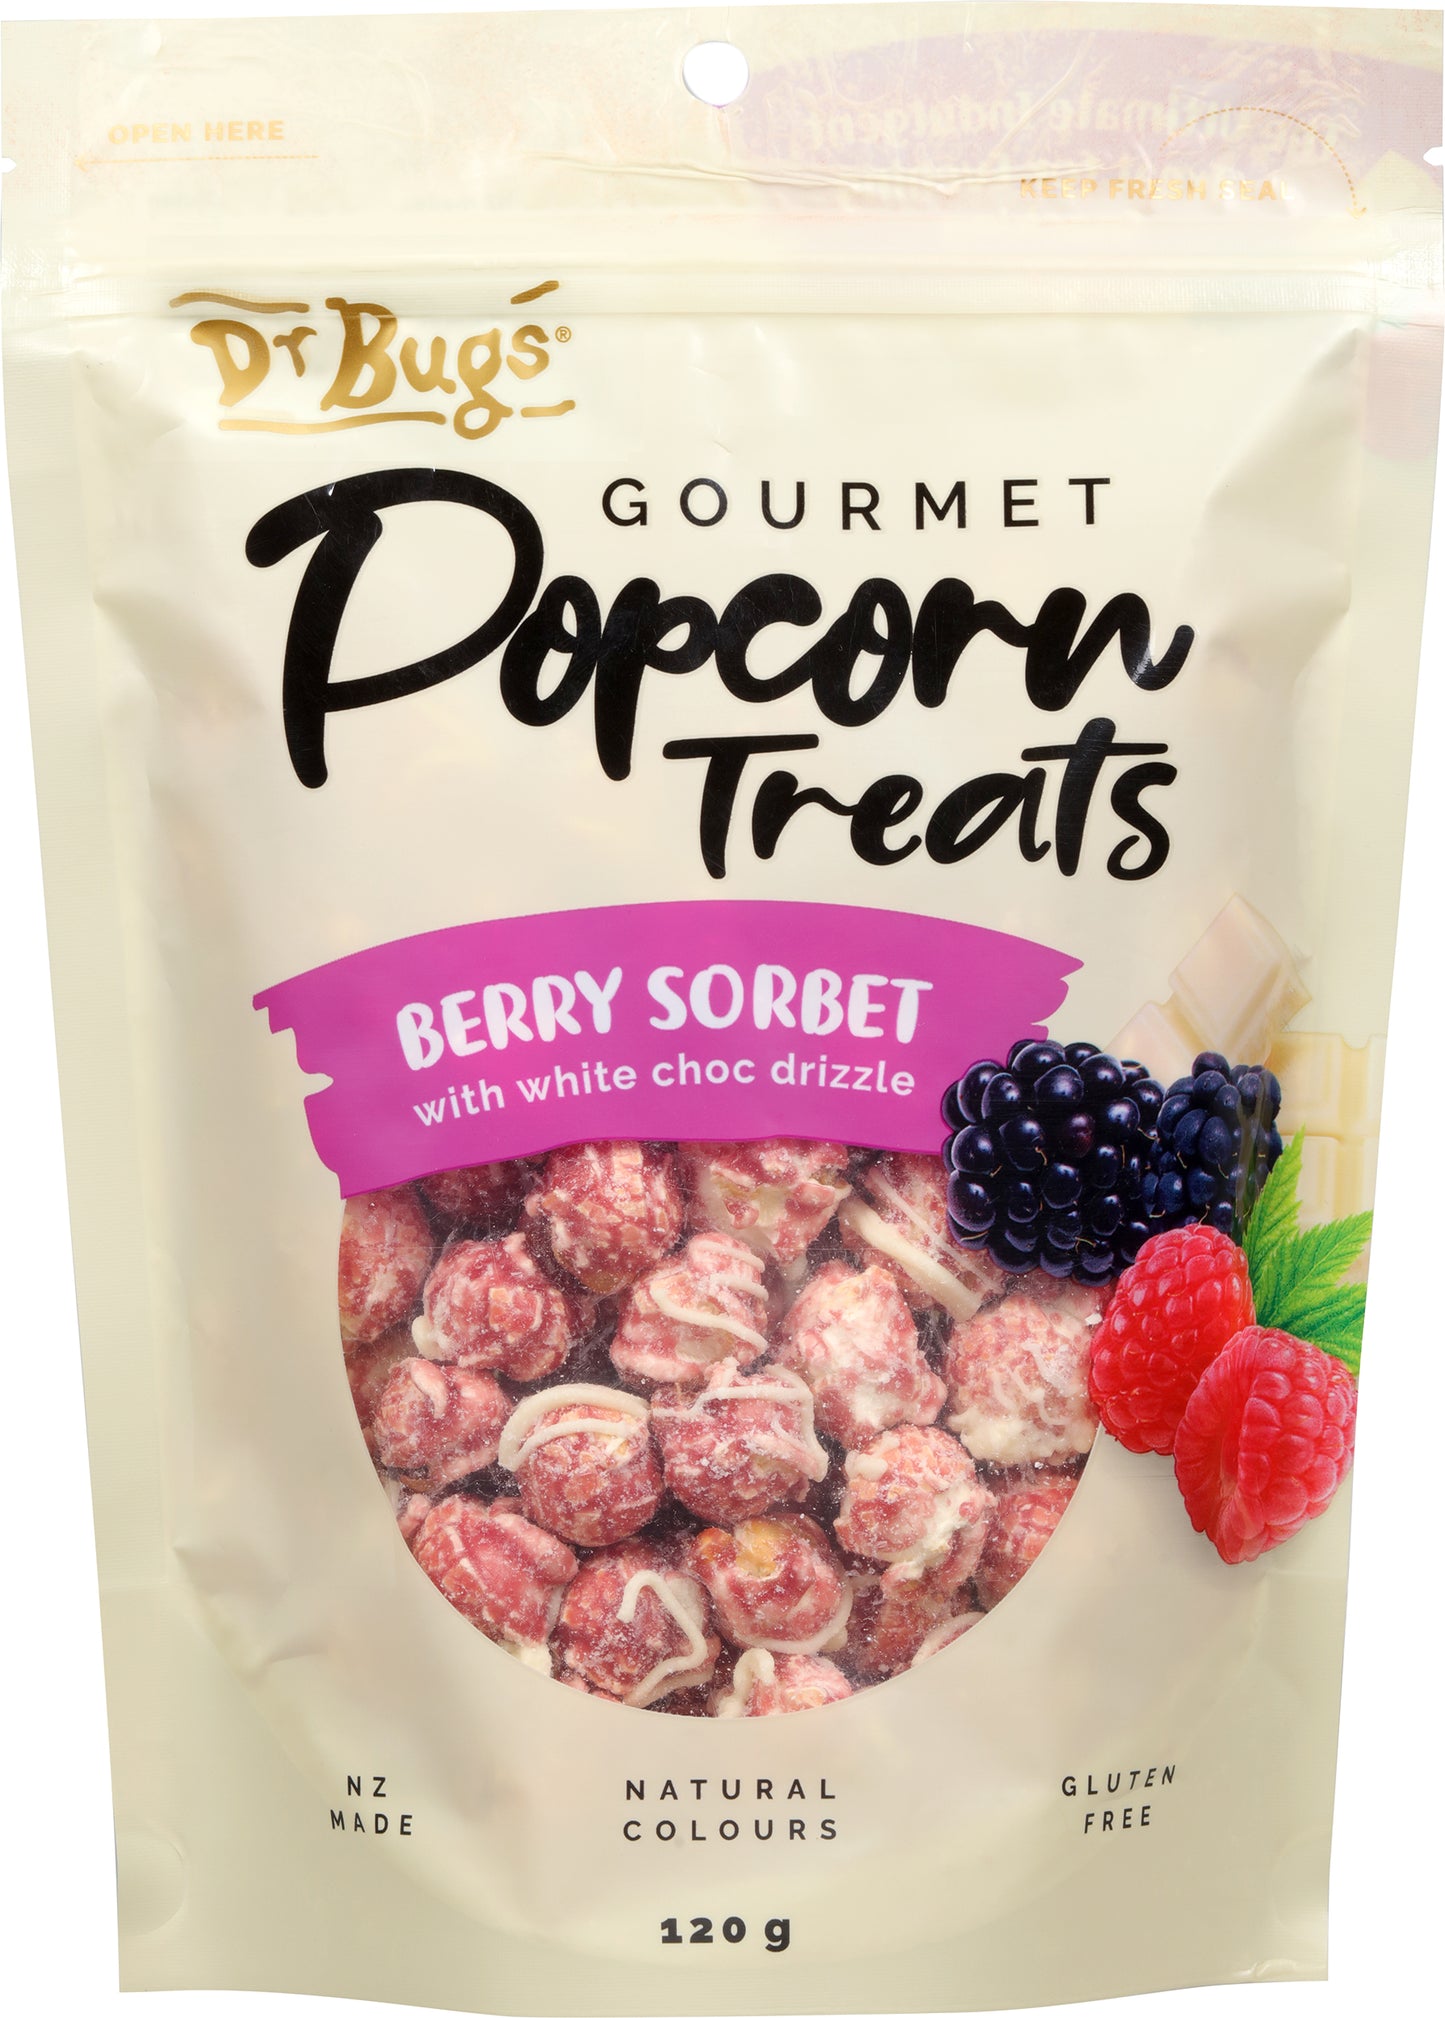 Dr Bugs Berry Sorbet Gourmet Popcorn Treats 120g